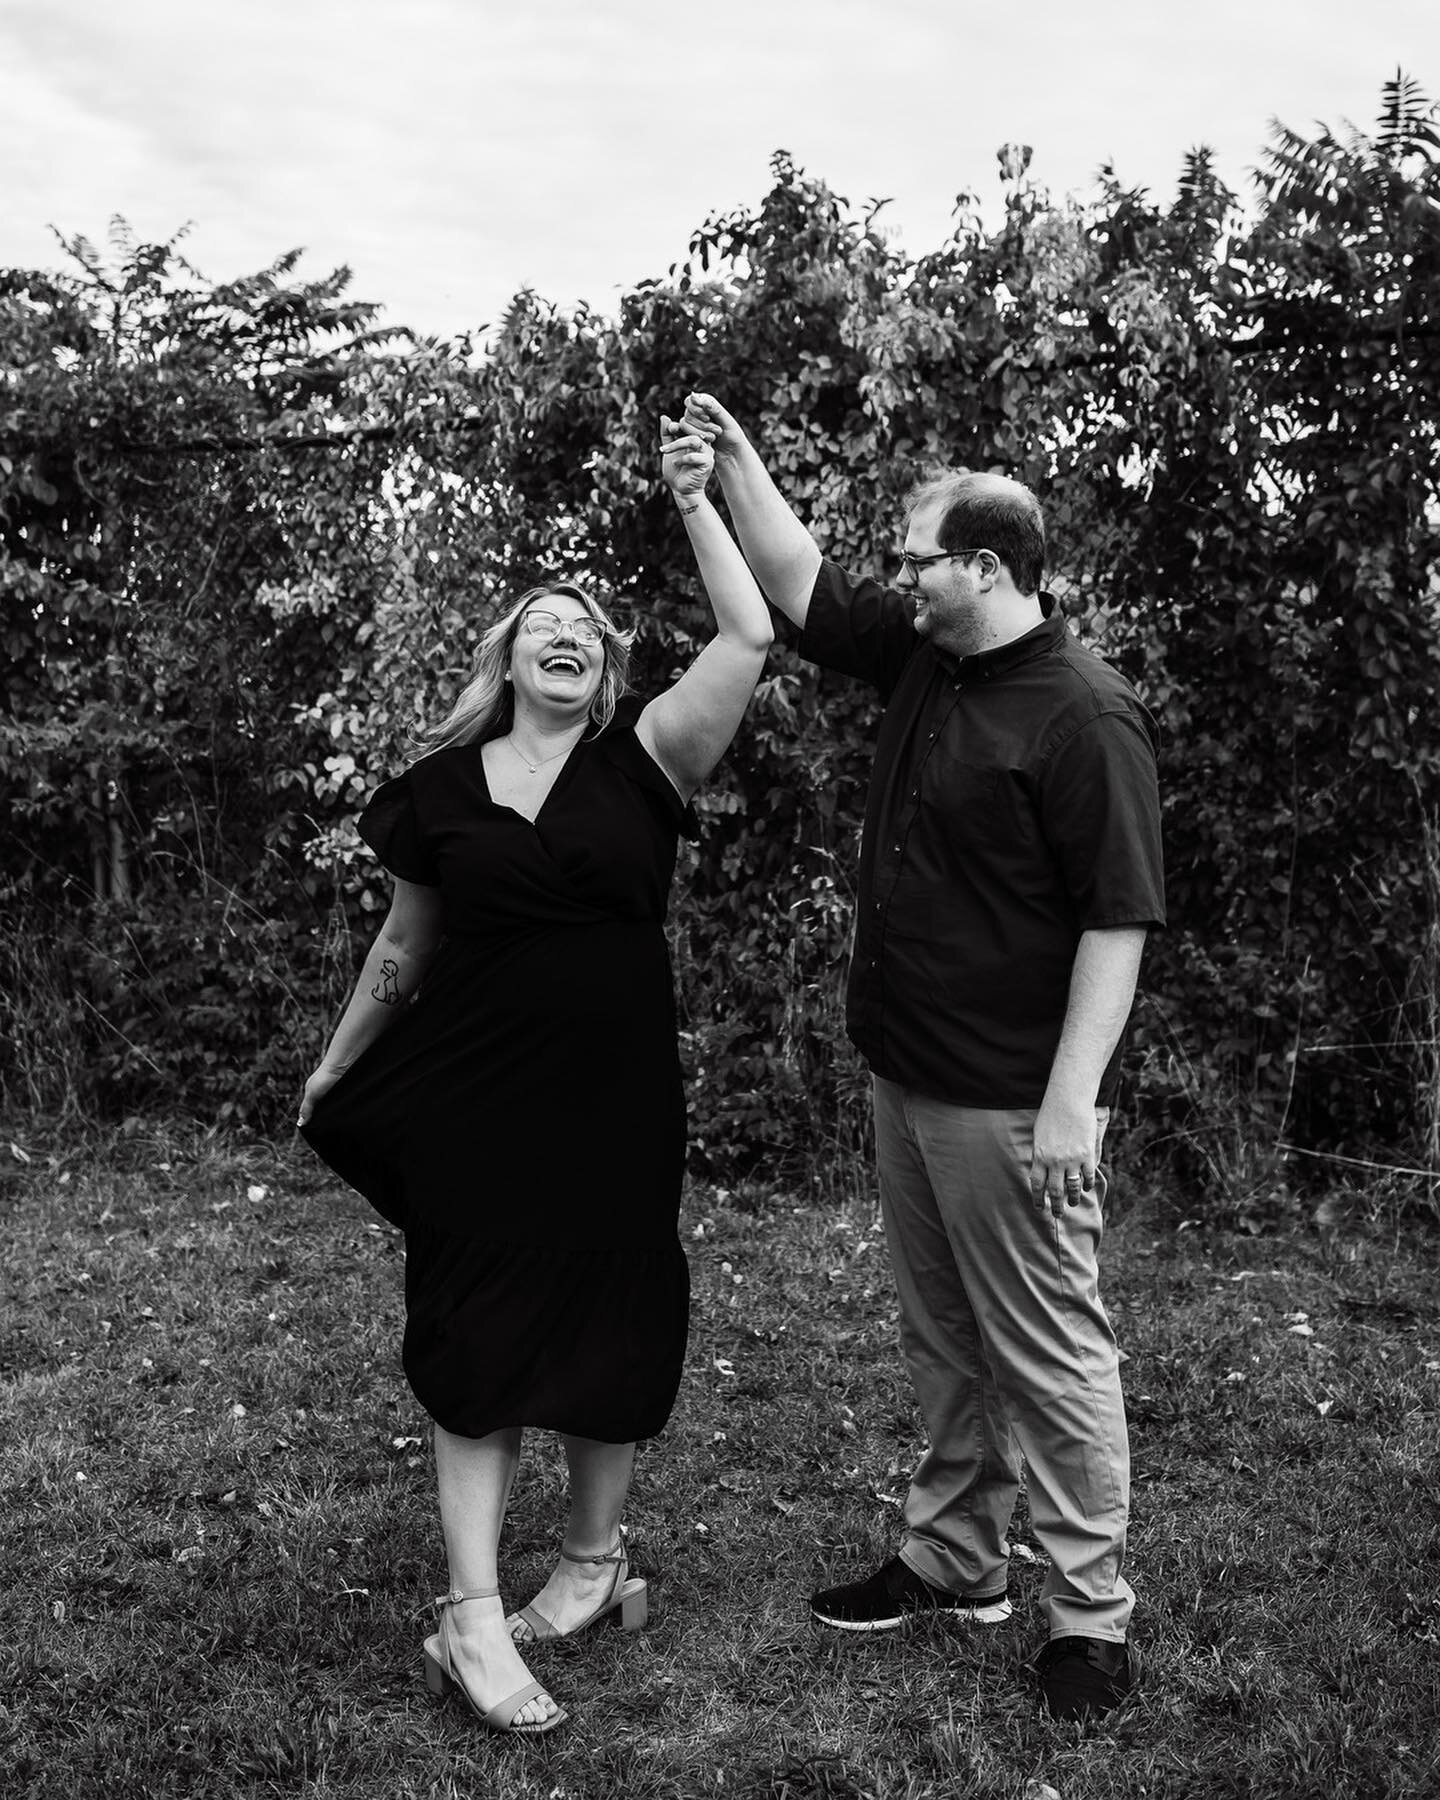 Cassie &amp; Scott | newlyweds 🤍
⠀⠀⠀⠀⠀⠀⠀⠀⠀
⠀⠀⠀⠀⠀⠀⠀⠀⠀
⠀⠀⠀⠀⠀⠀⠀⠀⠀
⠀⠀⠀⠀⠀⠀⠀⠀⠀
⠀⠀⠀⠀⠀⠀⠀⠀⠀
⠀⠀⠀⠀⠀⠀⠀⠀⠀
⠀⠀⠀⠀⠀⠀⠀⠀⠀
@cassssieee_14  #kaitlinpowellphotography #pittsburghengagement #pittsburghcouples  #pittsburghweddingphotographer #burghbrides #newlywed #pittsbu